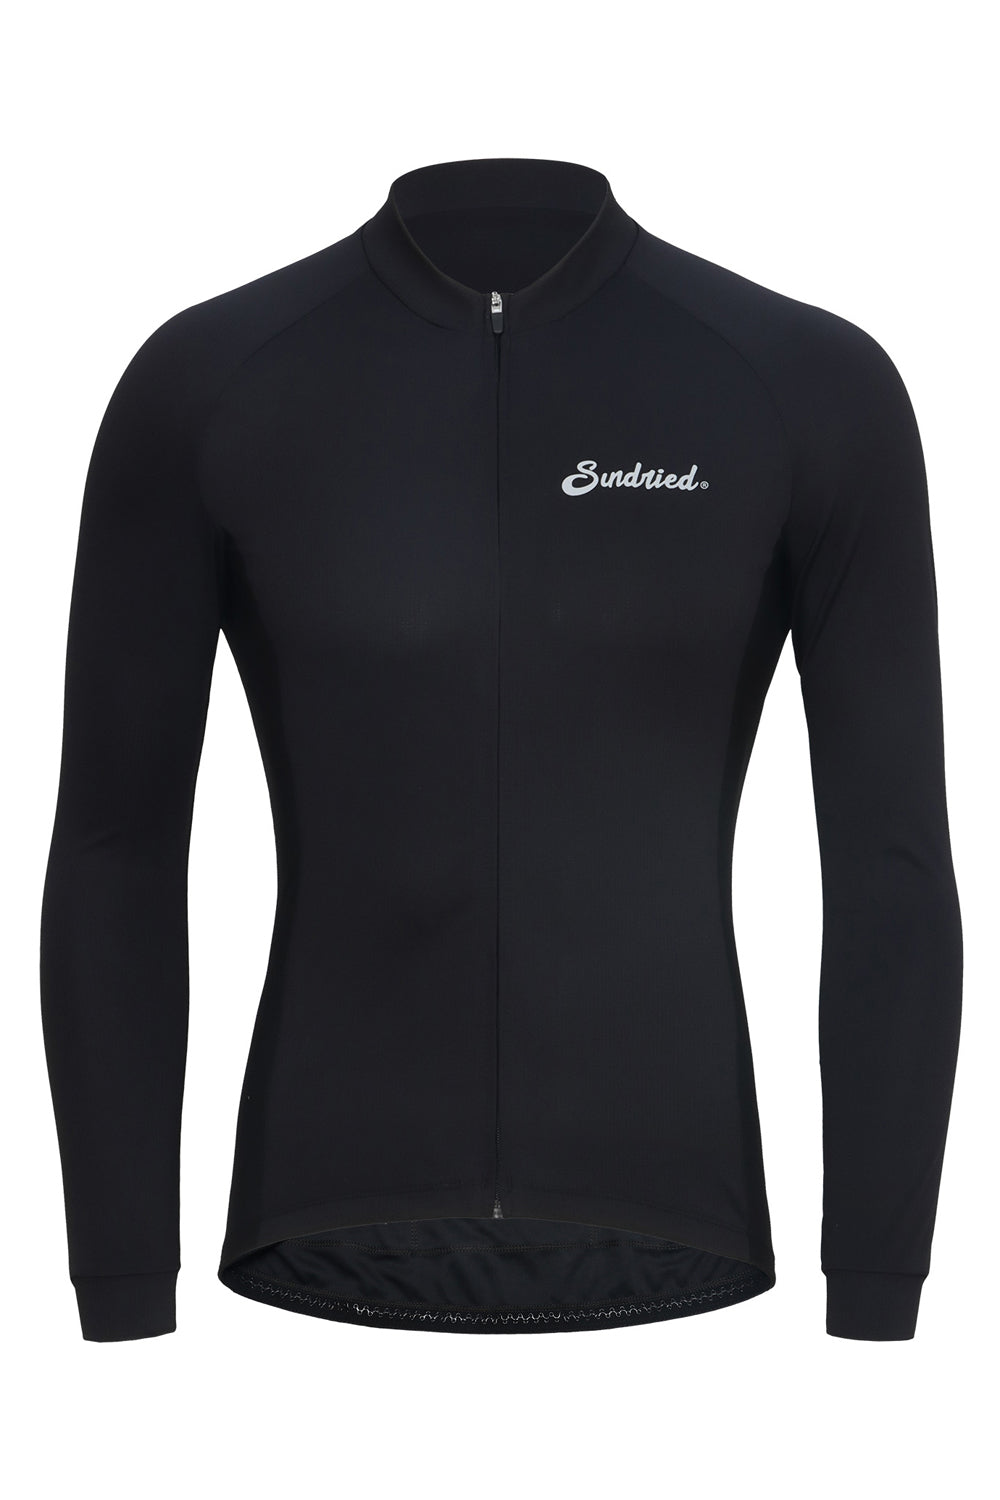 Sundried Sport Men's Black Long Sleeved Cycle Jersey Long Sleeve Jersey S SS1007 S Black Activewear